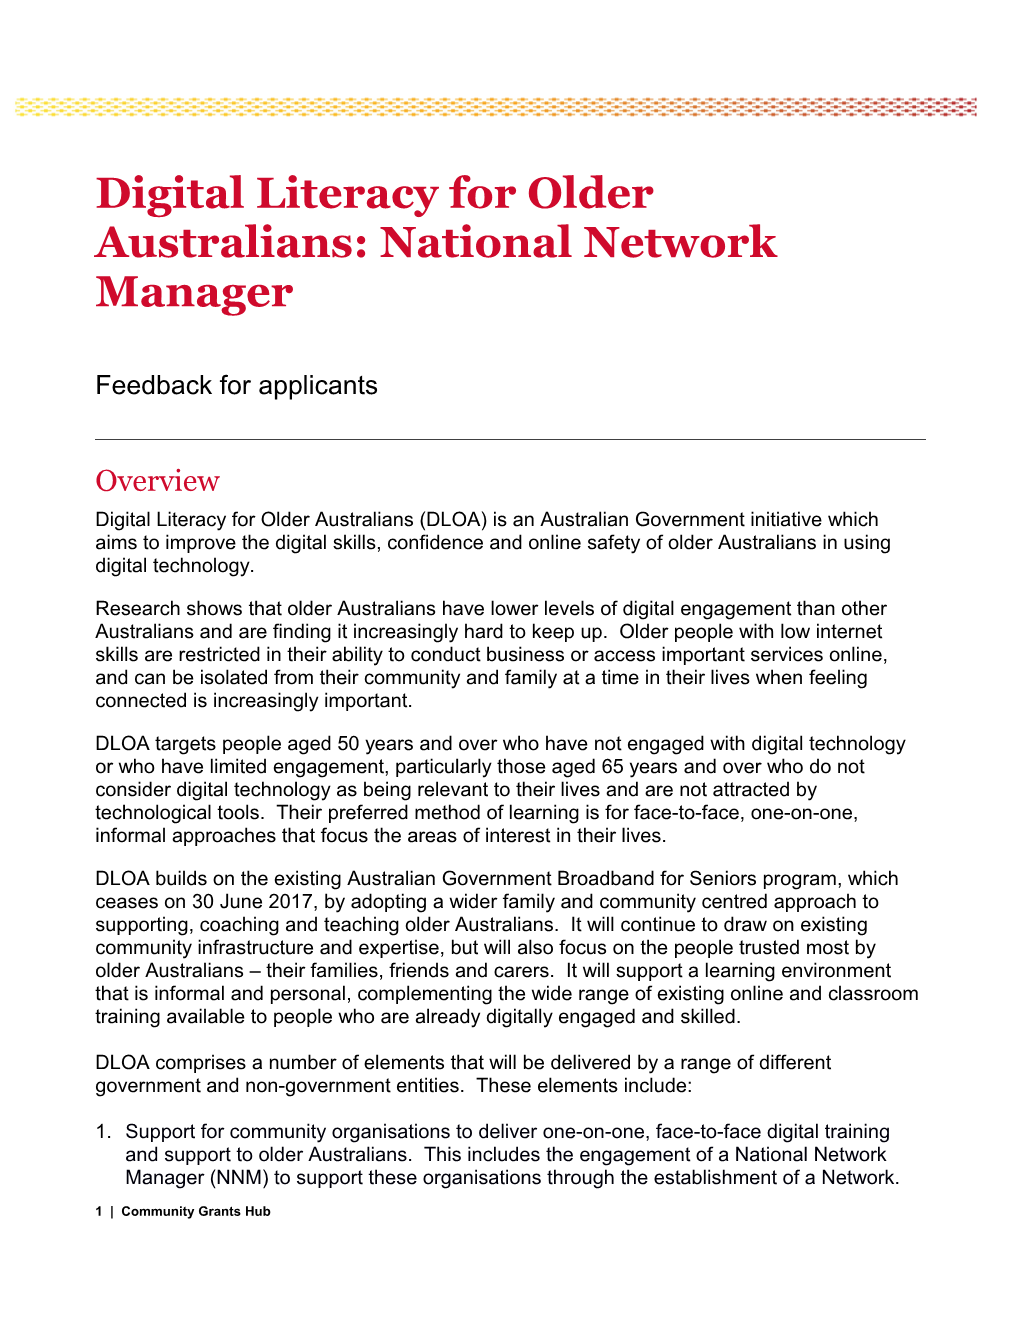 Digital Literacy for Older Australians: National Network Manager